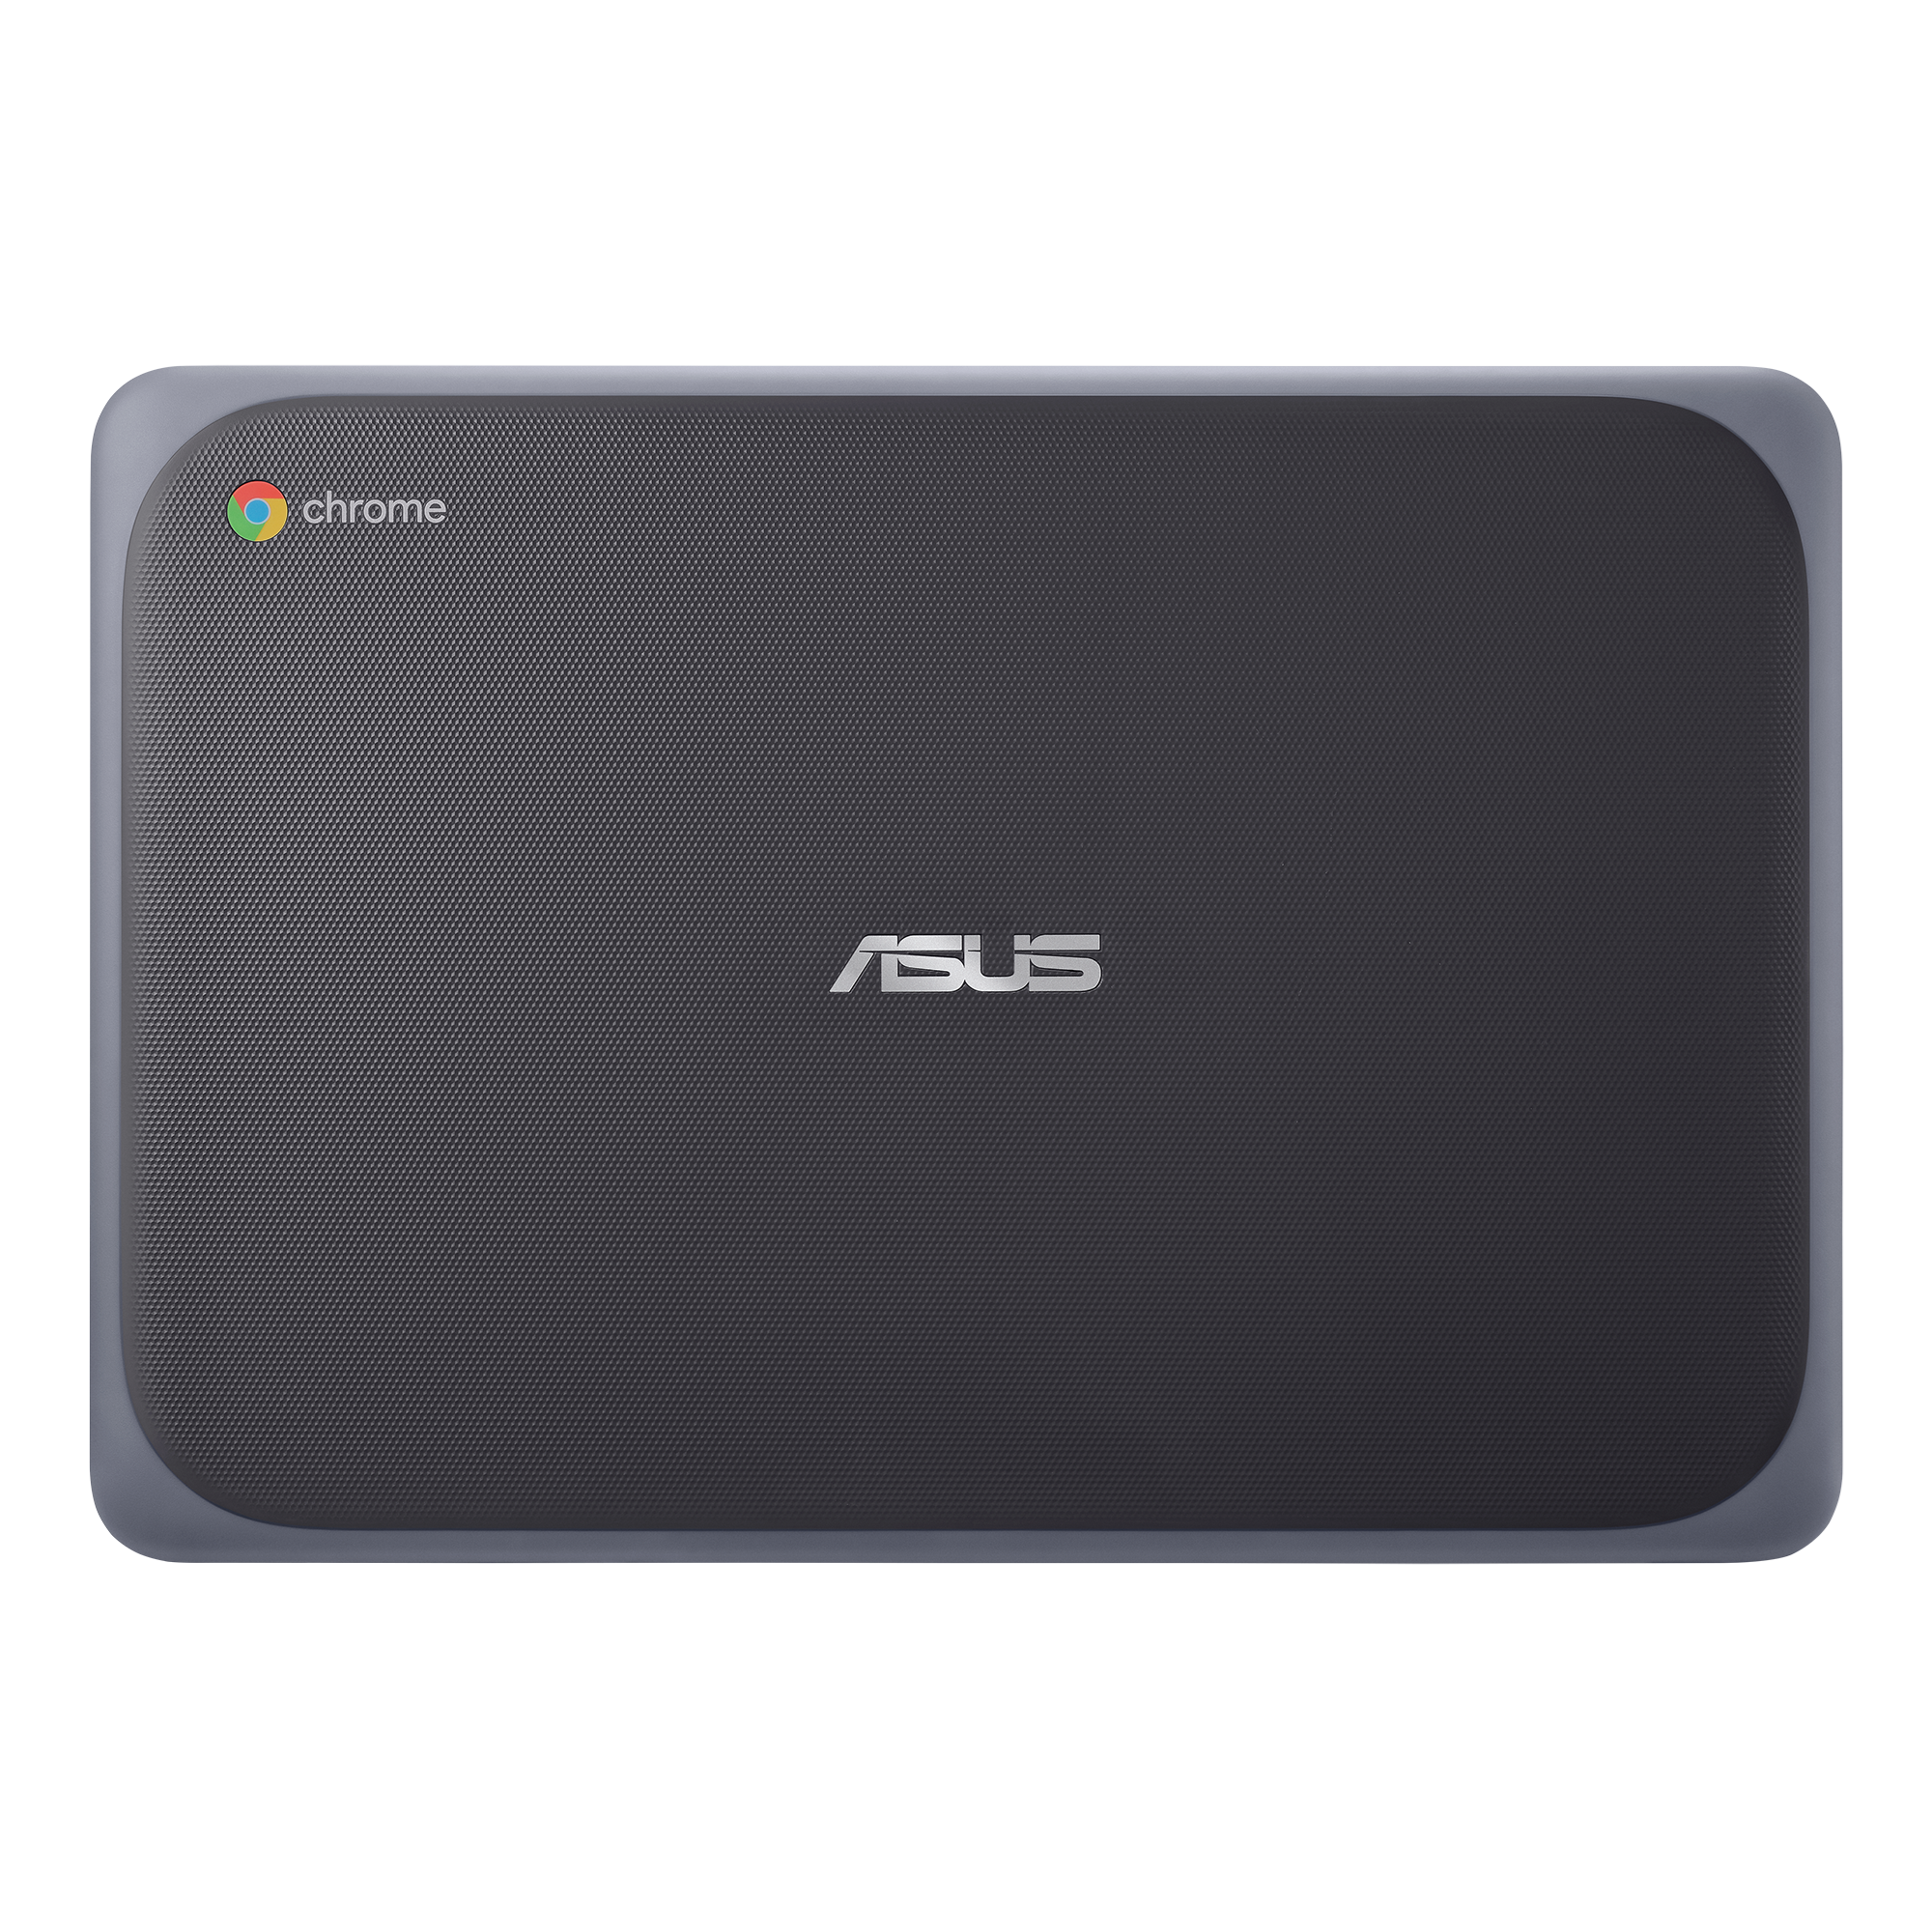 Асус 11 ультра. ASUS Chromebook c200. Mb166c ASUS. ASUS USA. ASUS Intel inside an30.